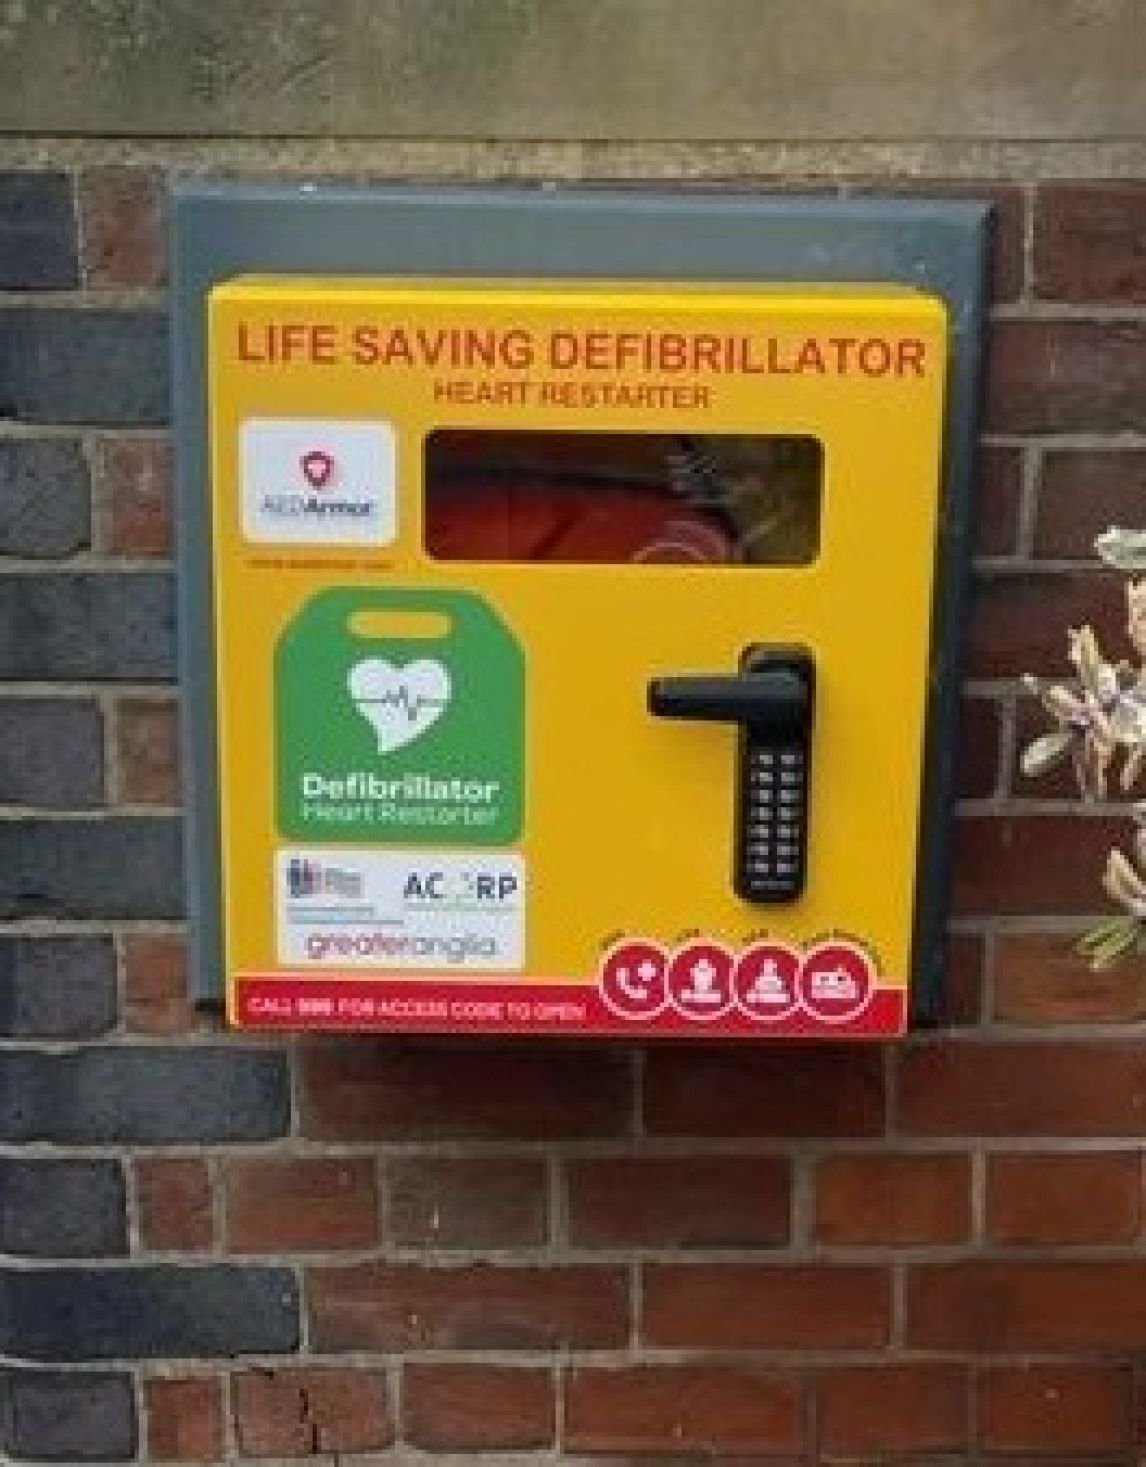 Life saving defibrillator